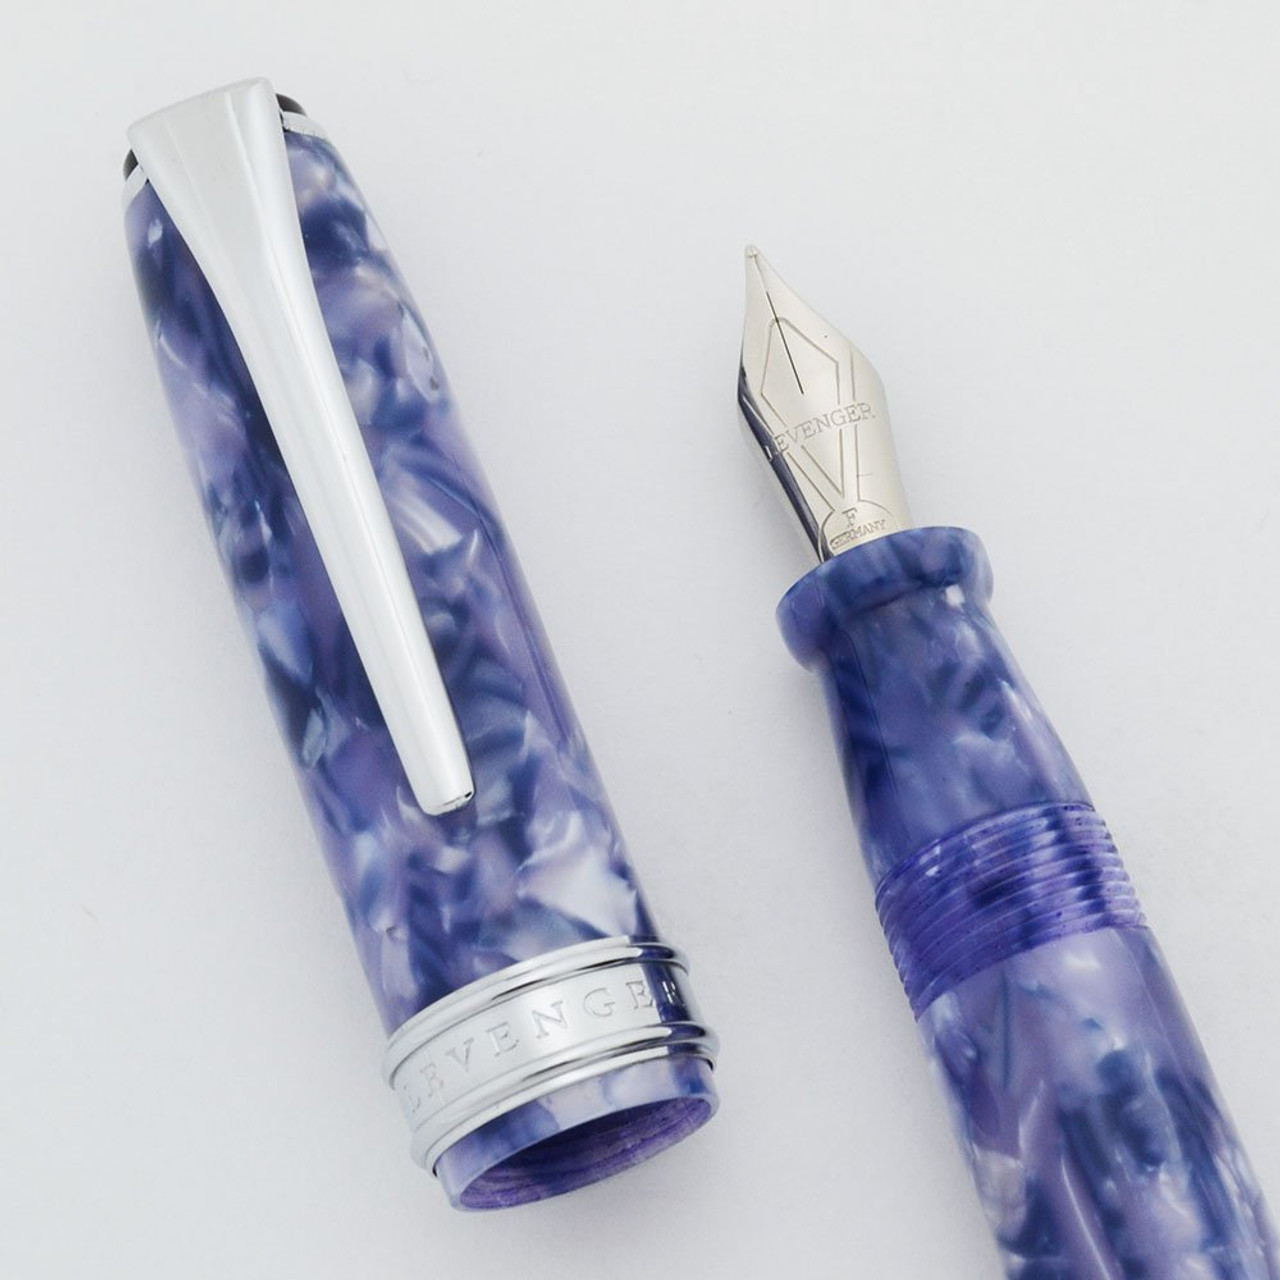 Levenger True Writer Fountain Pen - Lilac Marble, Silver Trim, Fine Nib (Mint, Works Well)